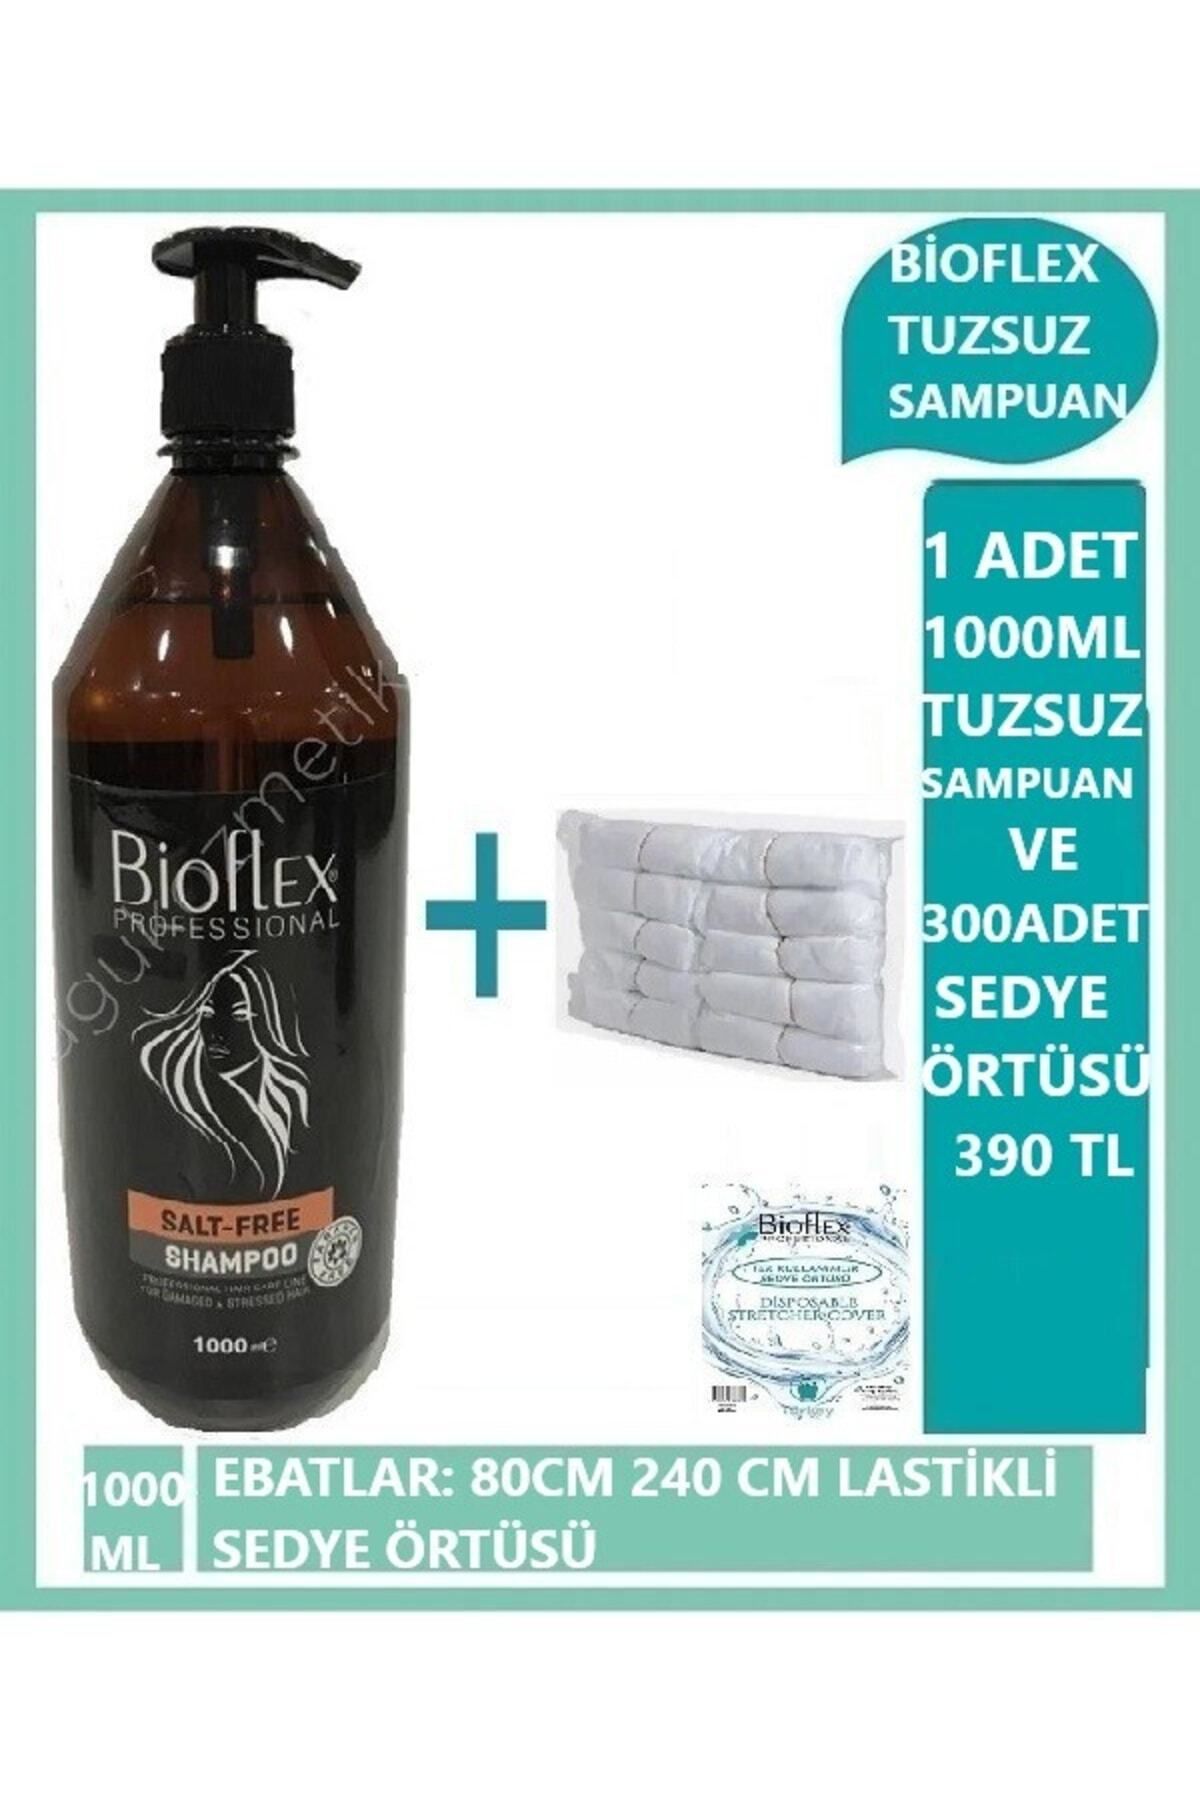 Bioflex Professional Tuzsuz Sampuan 1000 ml Ve 300 Adet Sedye Örtüsü